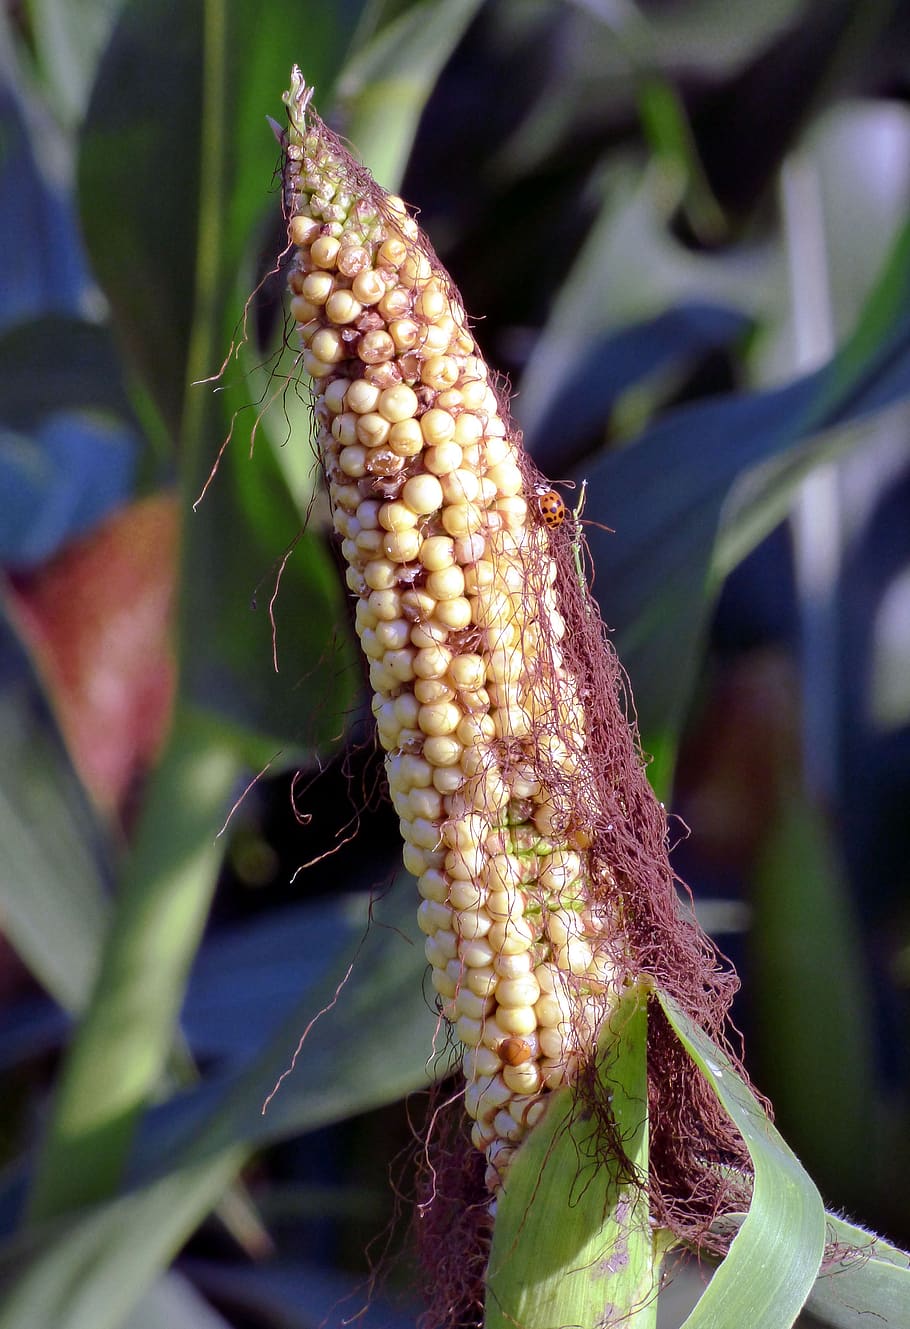 corn, grains, cereals, epi, agriculture, cultures, agricultural, nature, plant, close-up